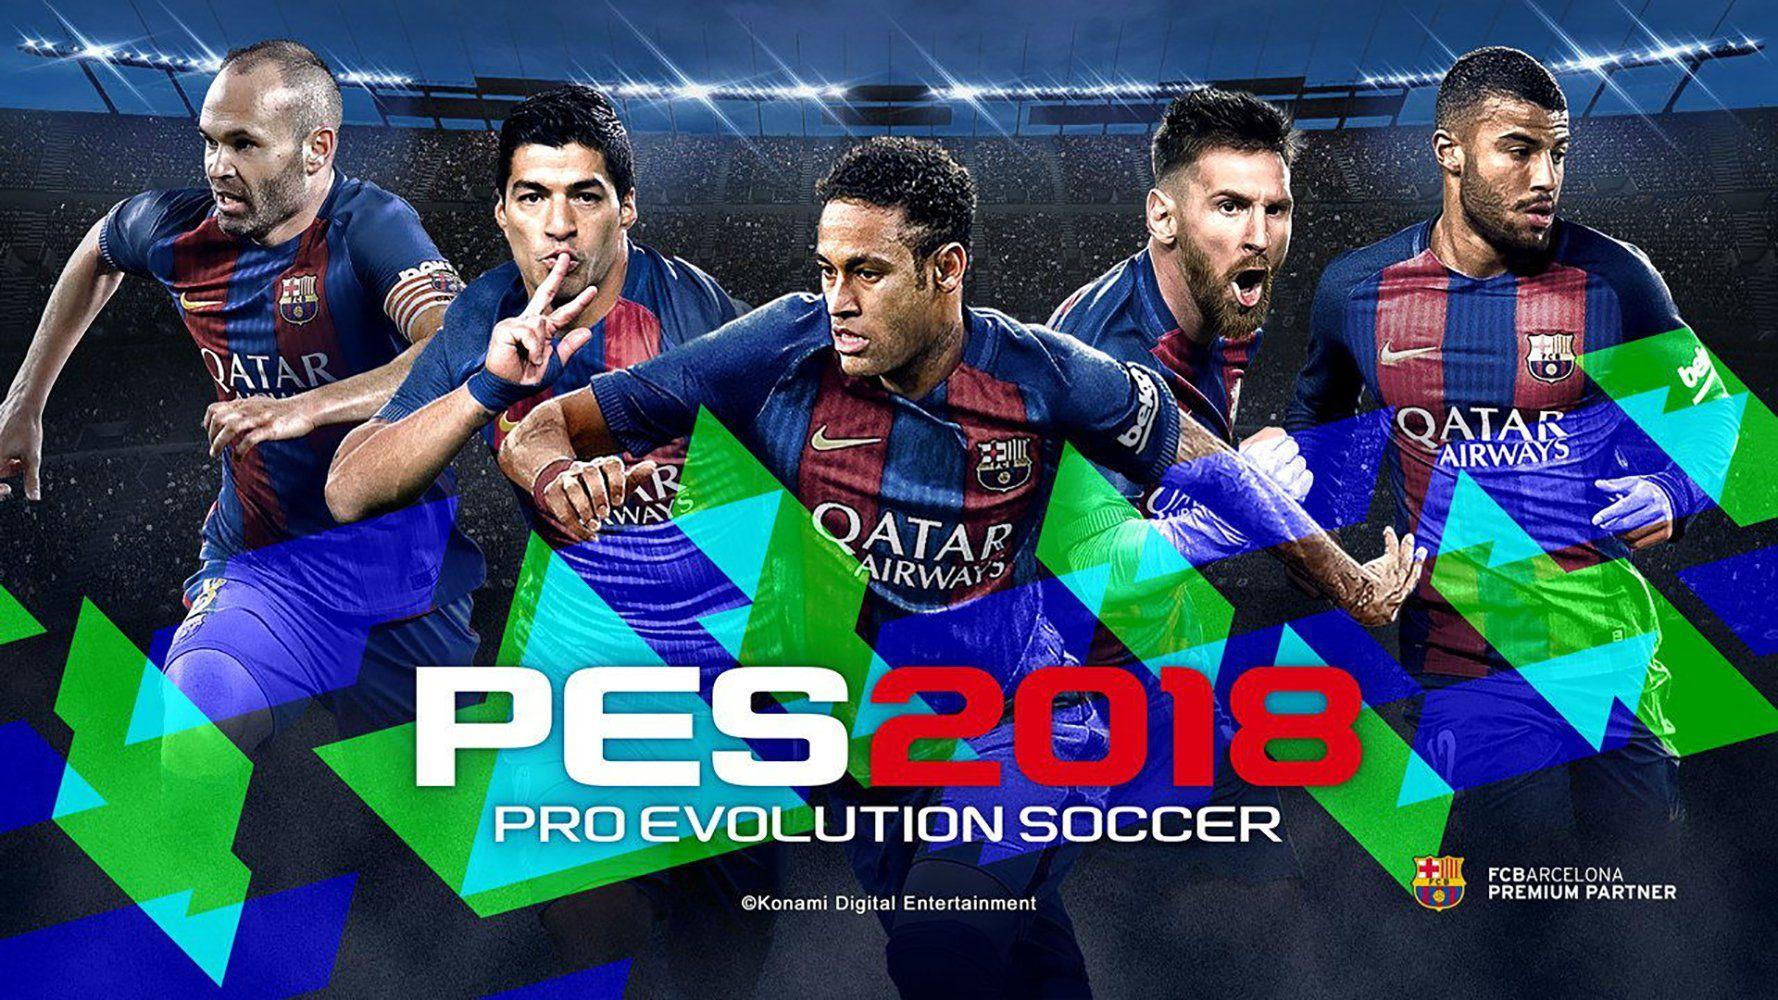 Pro Evolution Soccer 2018 Bakgrund and Bakgrundx1000